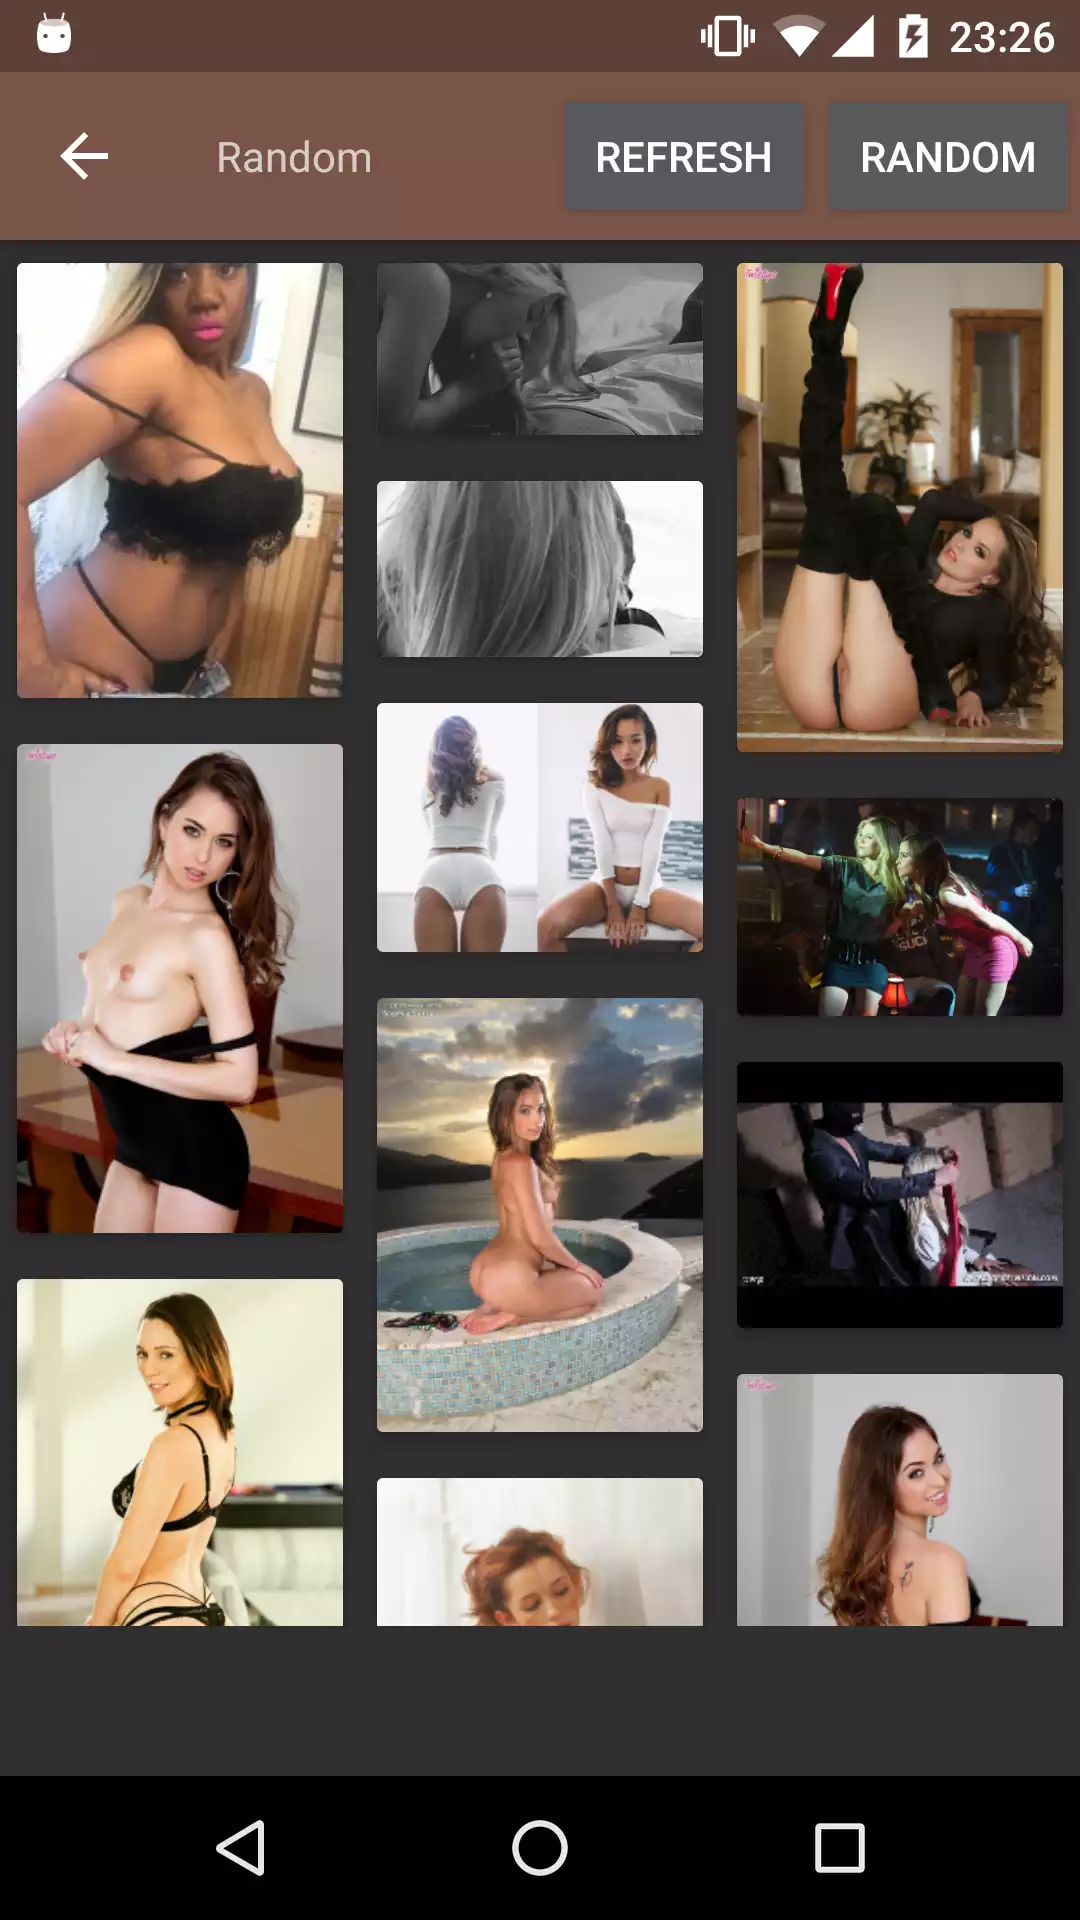 Hot pornstar pics wallpapers,photos,pornstars,android,apks,hentai,erotic,picture,comix,porn,galleries,with,anime,pics,harem,apk,wallpaper,apps,pornostar,sexy,gallery